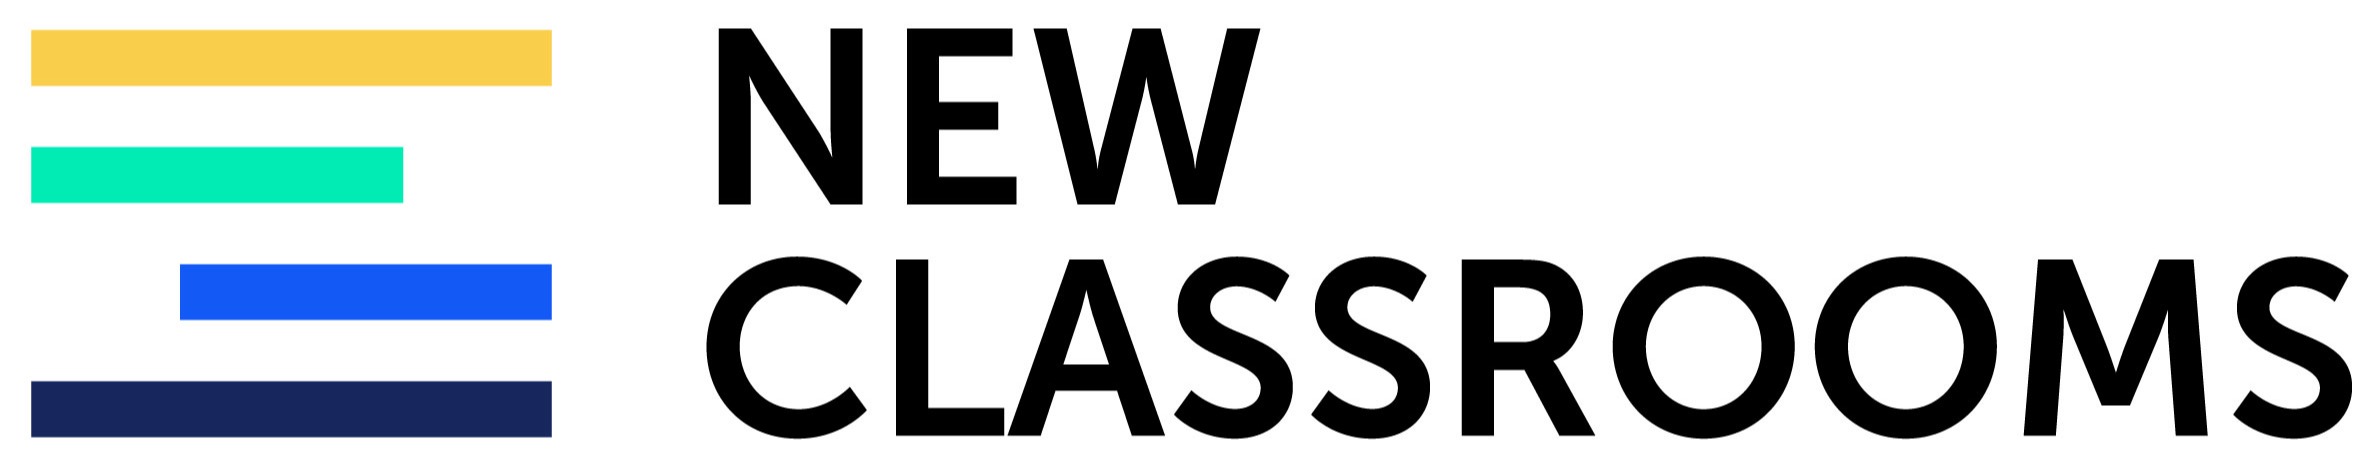 New Classrooms logo